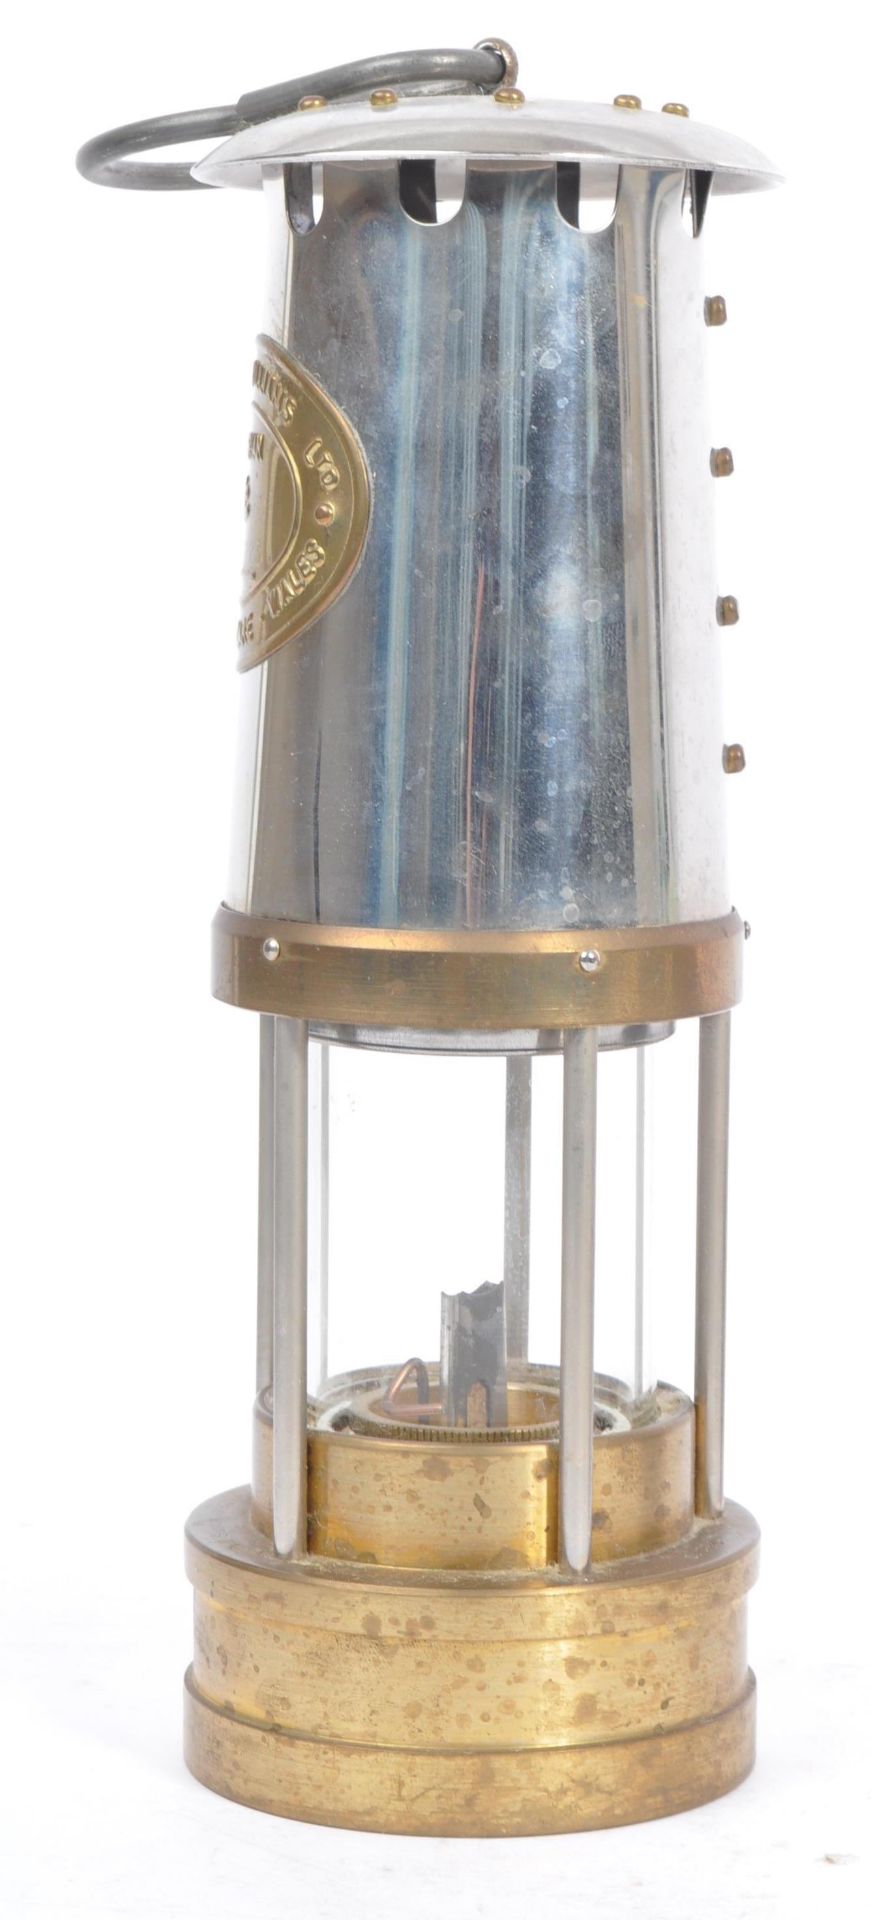 ORIGINAL VINTAGE MINERS FLAME SAFETY LAMP LIGHT UNUSED - Image 4 of 7